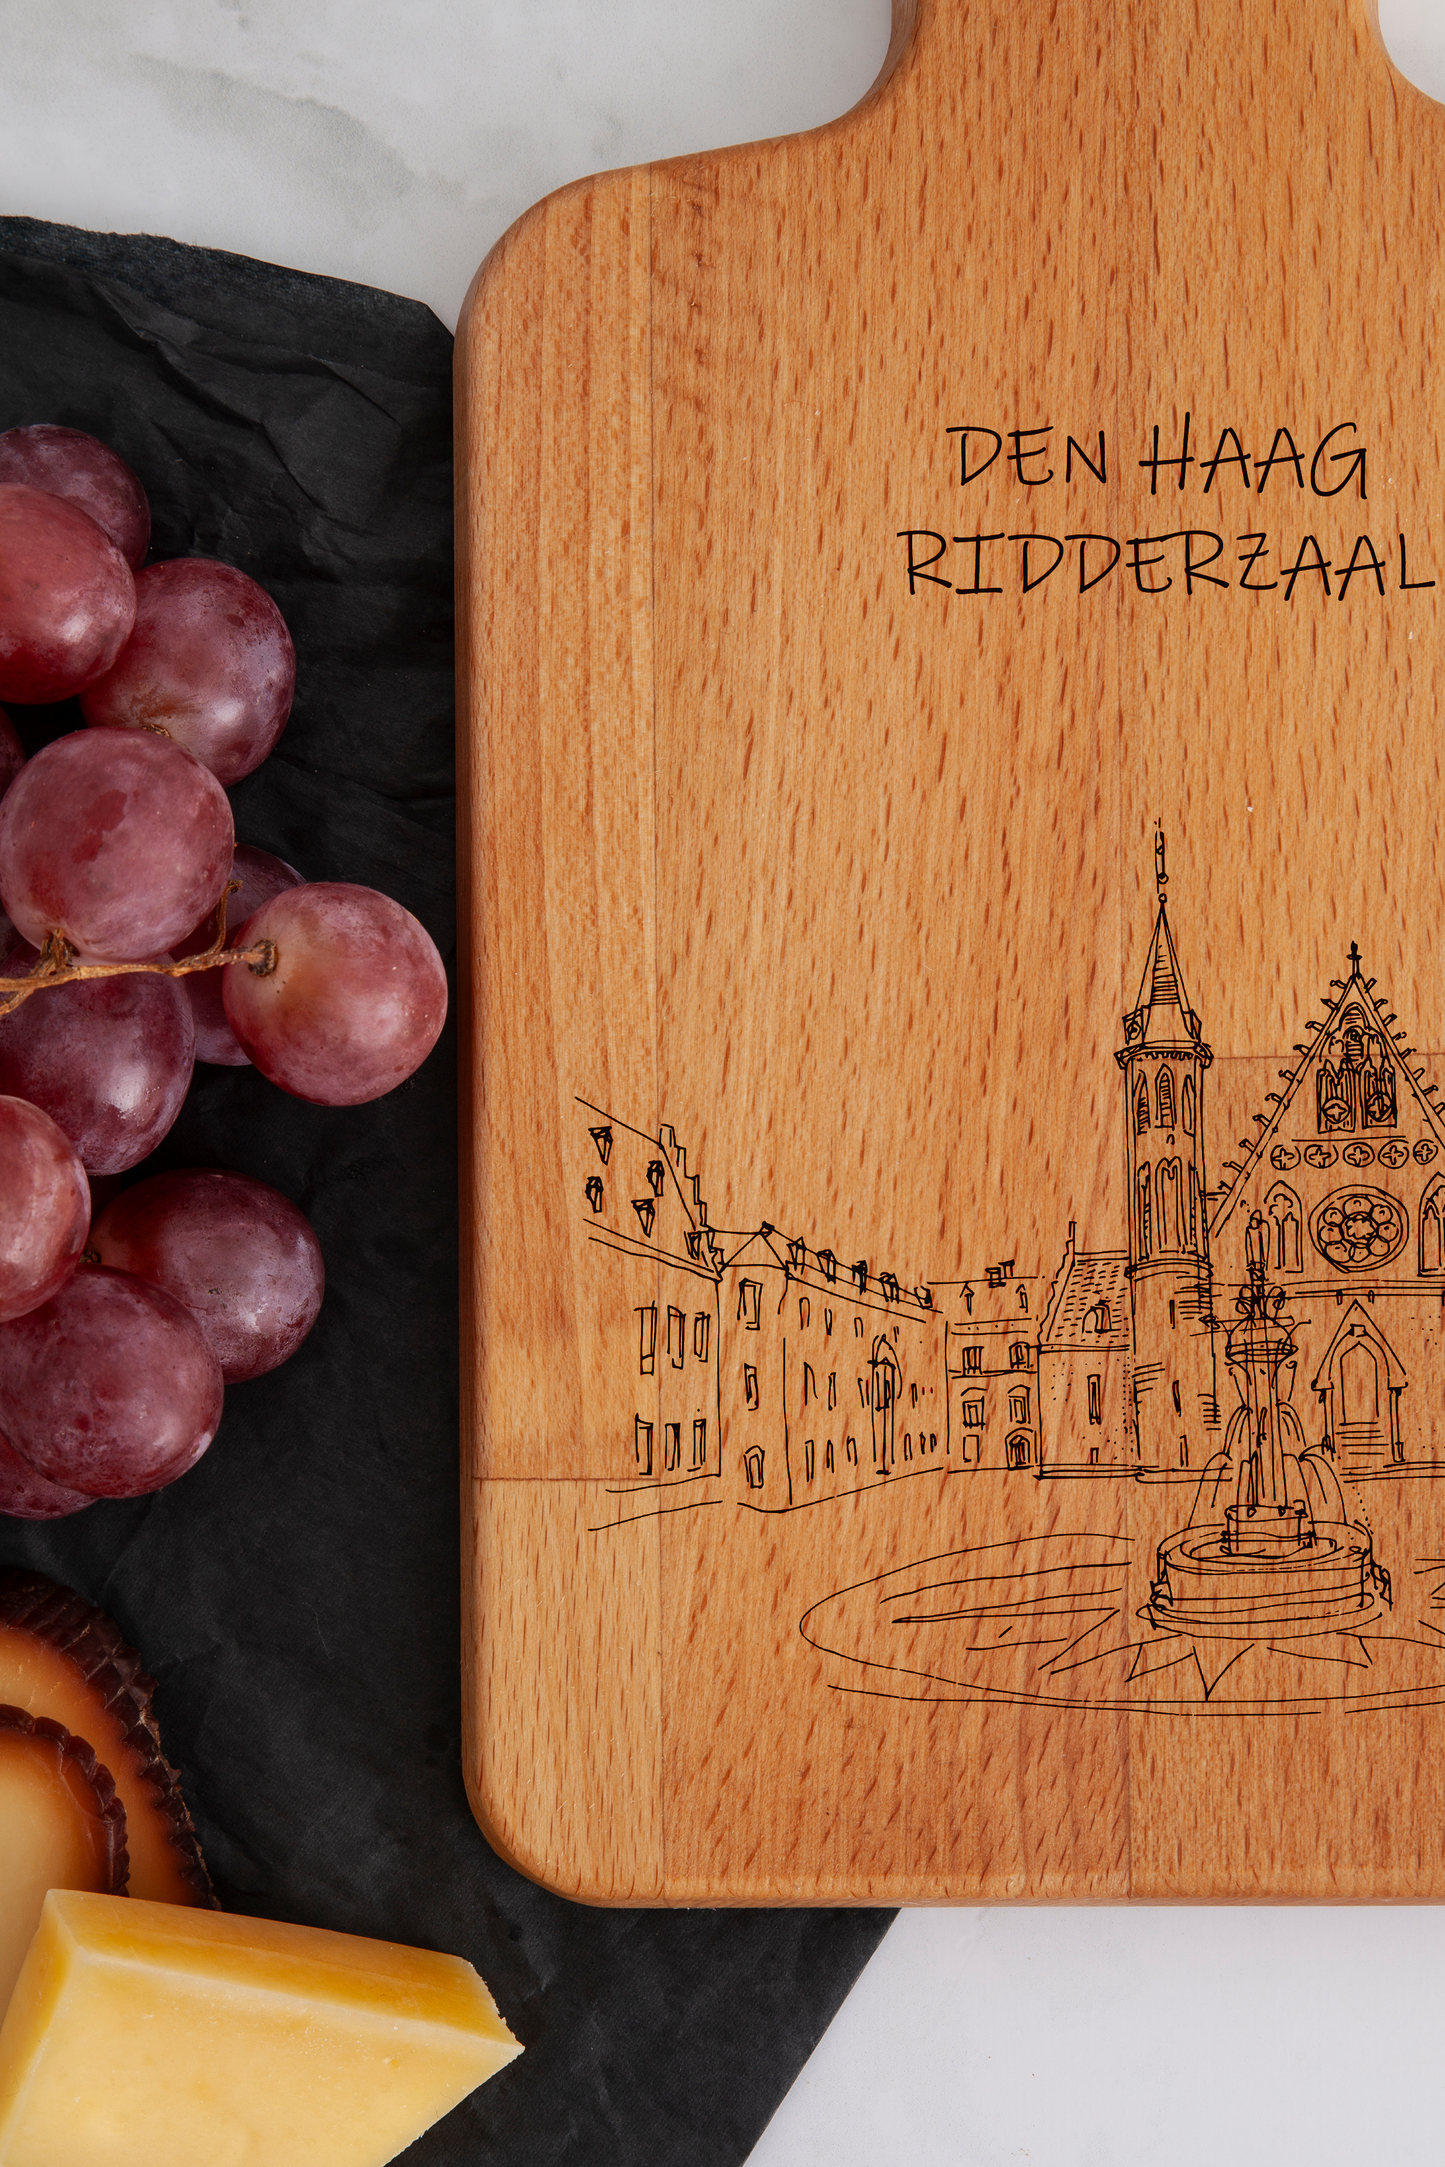 Den Haag, Ridderzaal, cheese board, close-up